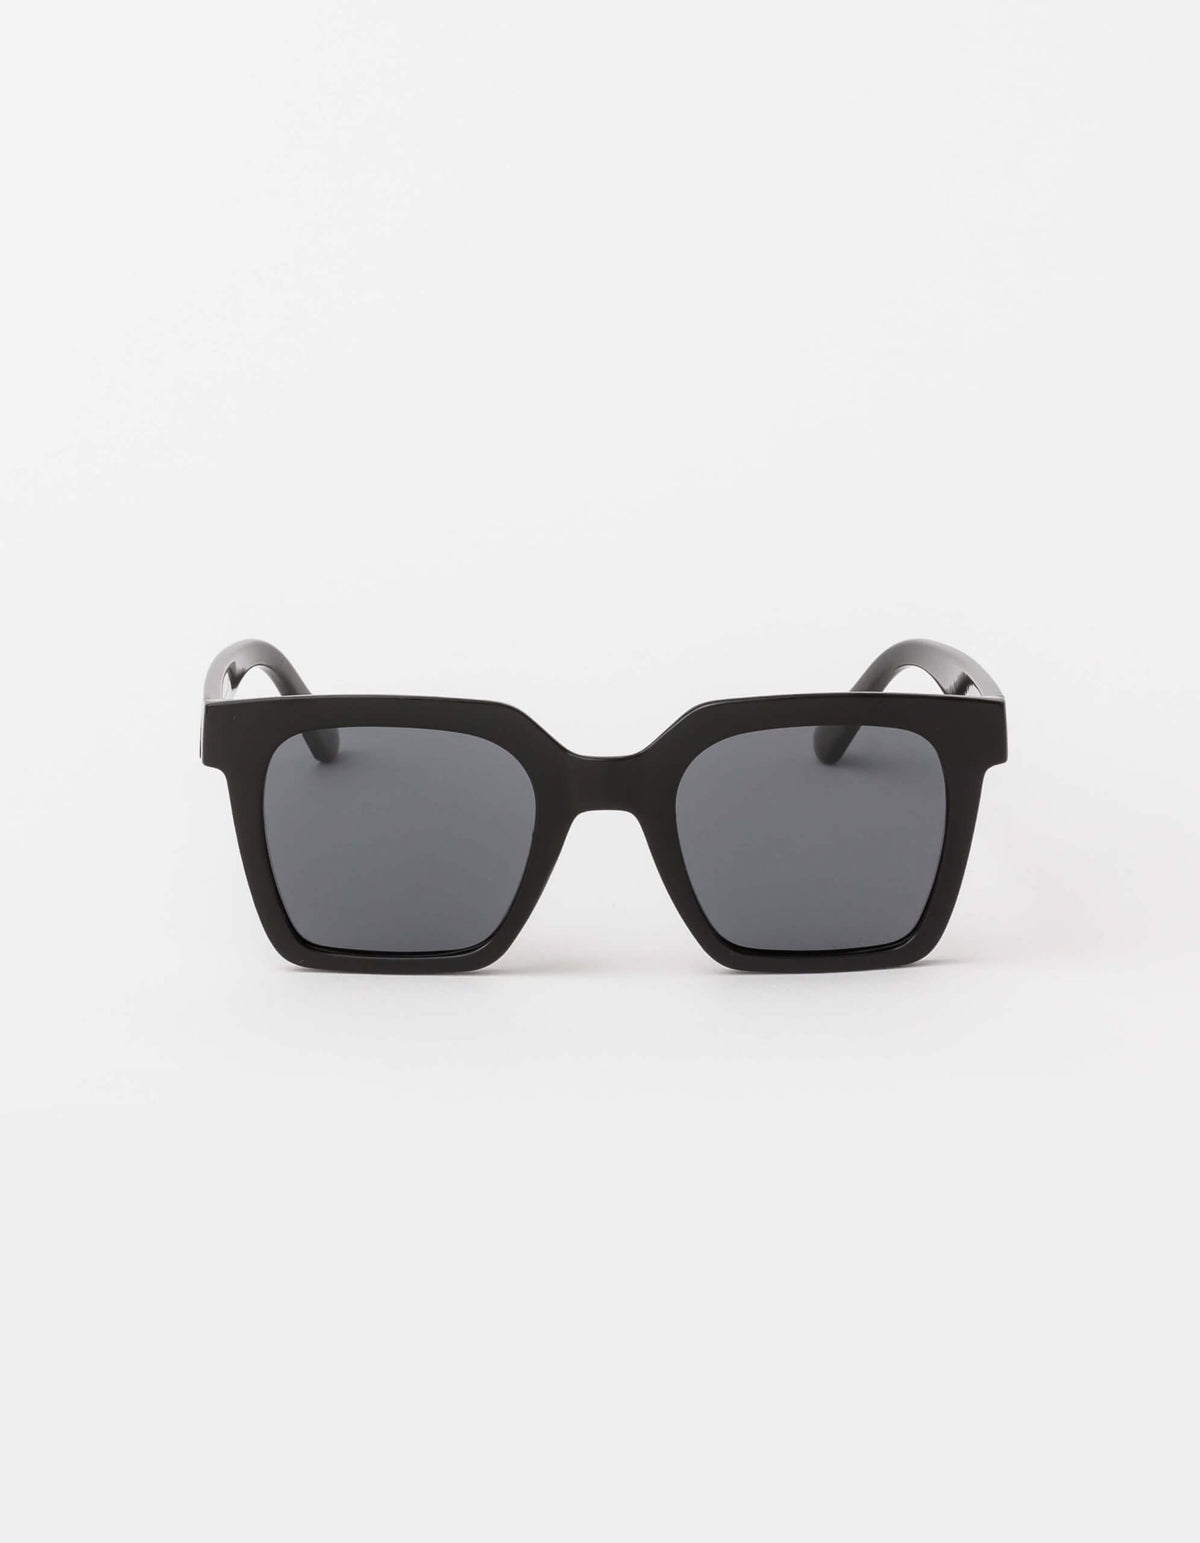 Milan Sunglasses Black